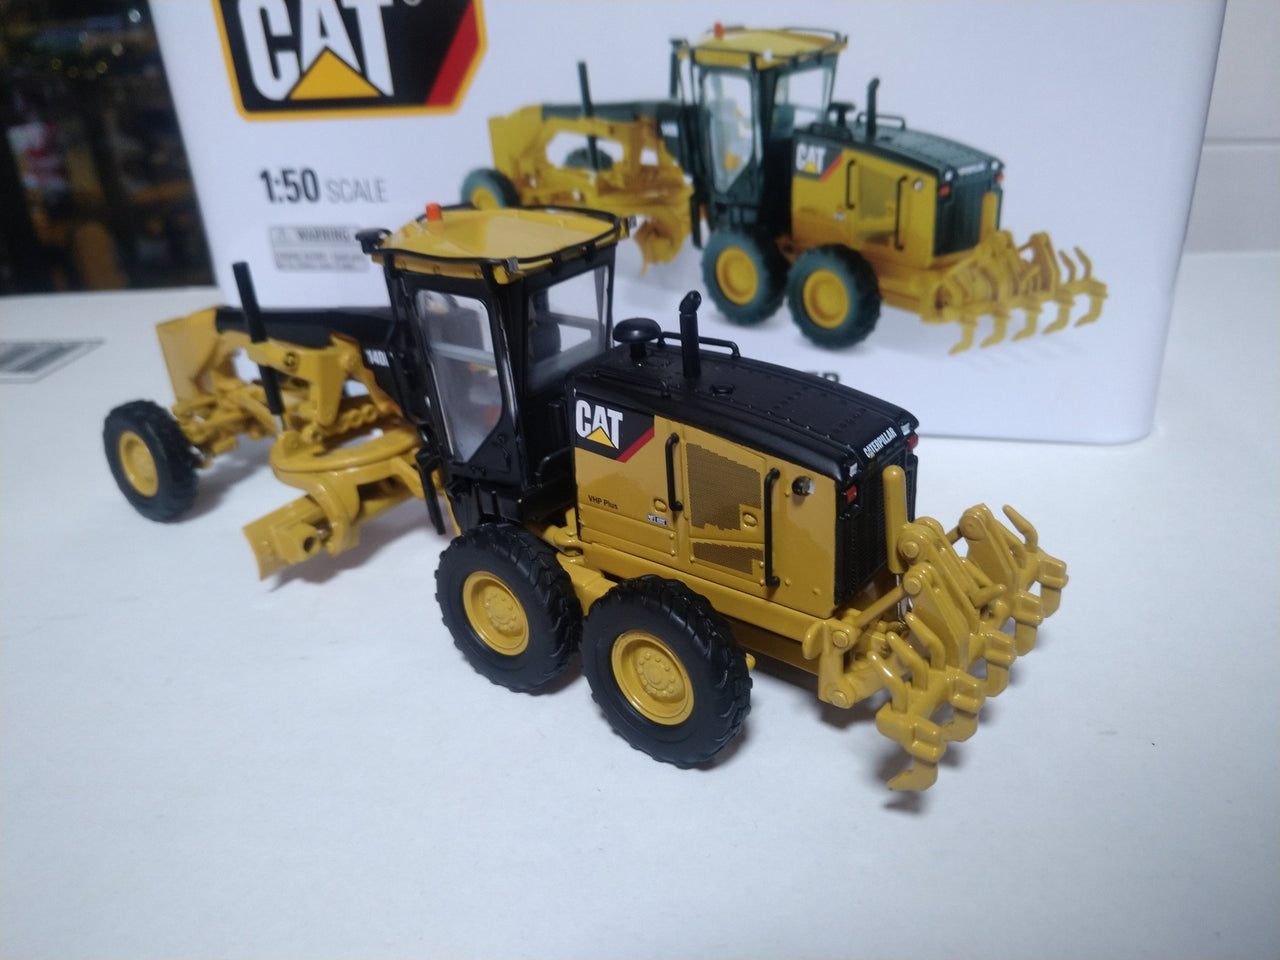 85236 Caterpillar 140M Motor Grader 1:50 Scale (Discontinued Model)